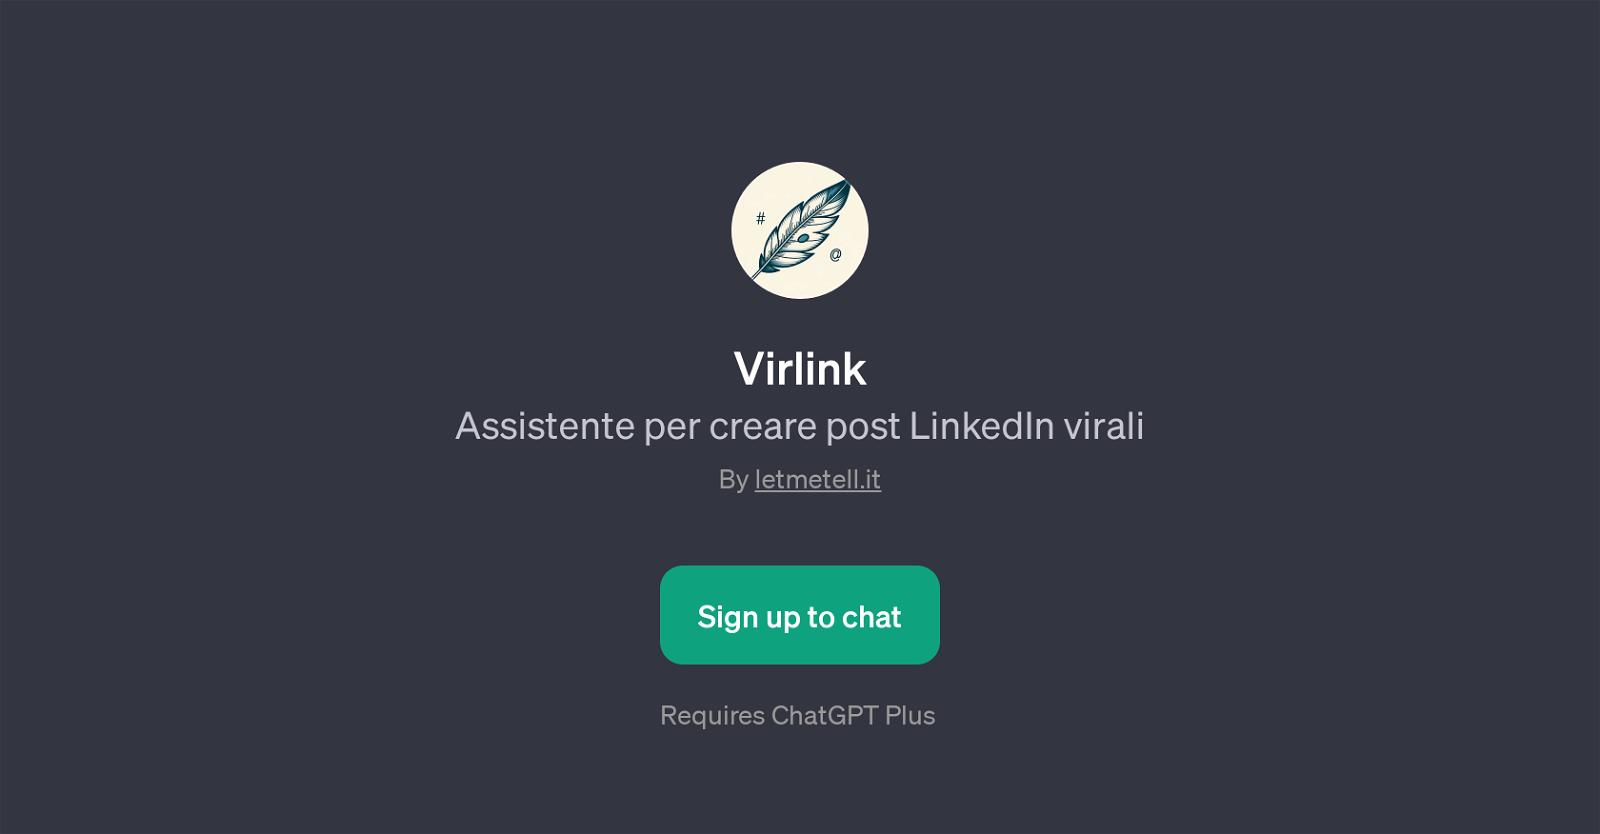 Virlink website